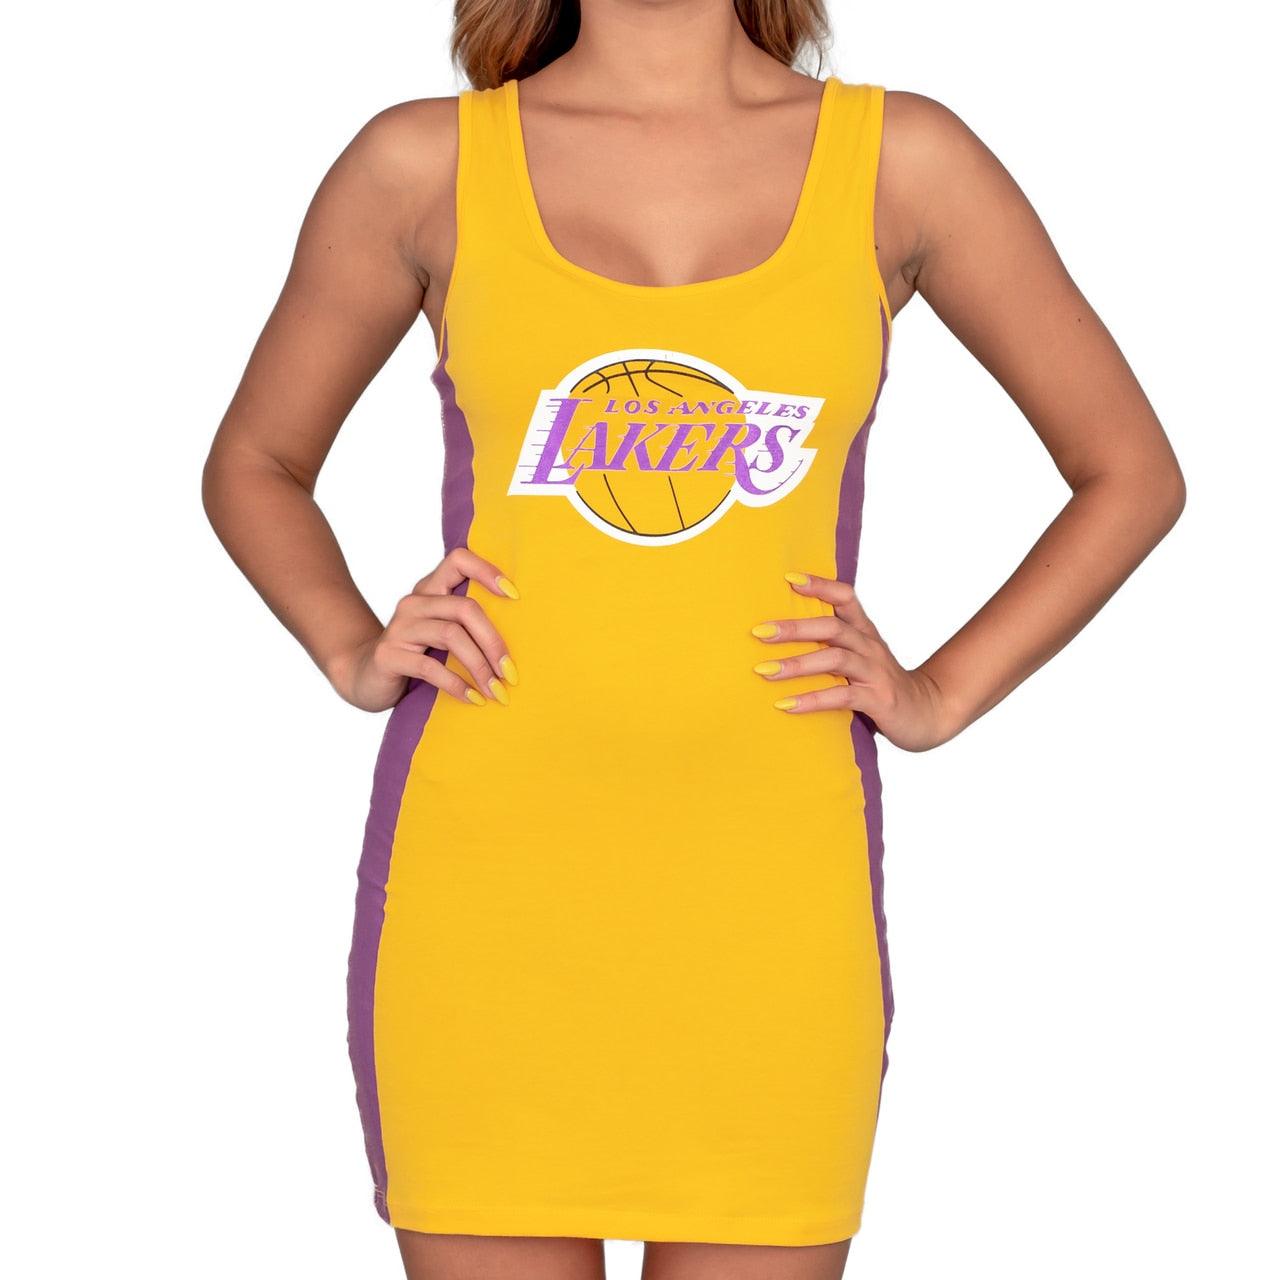 Laker Girls Cheerleader Tank Dress